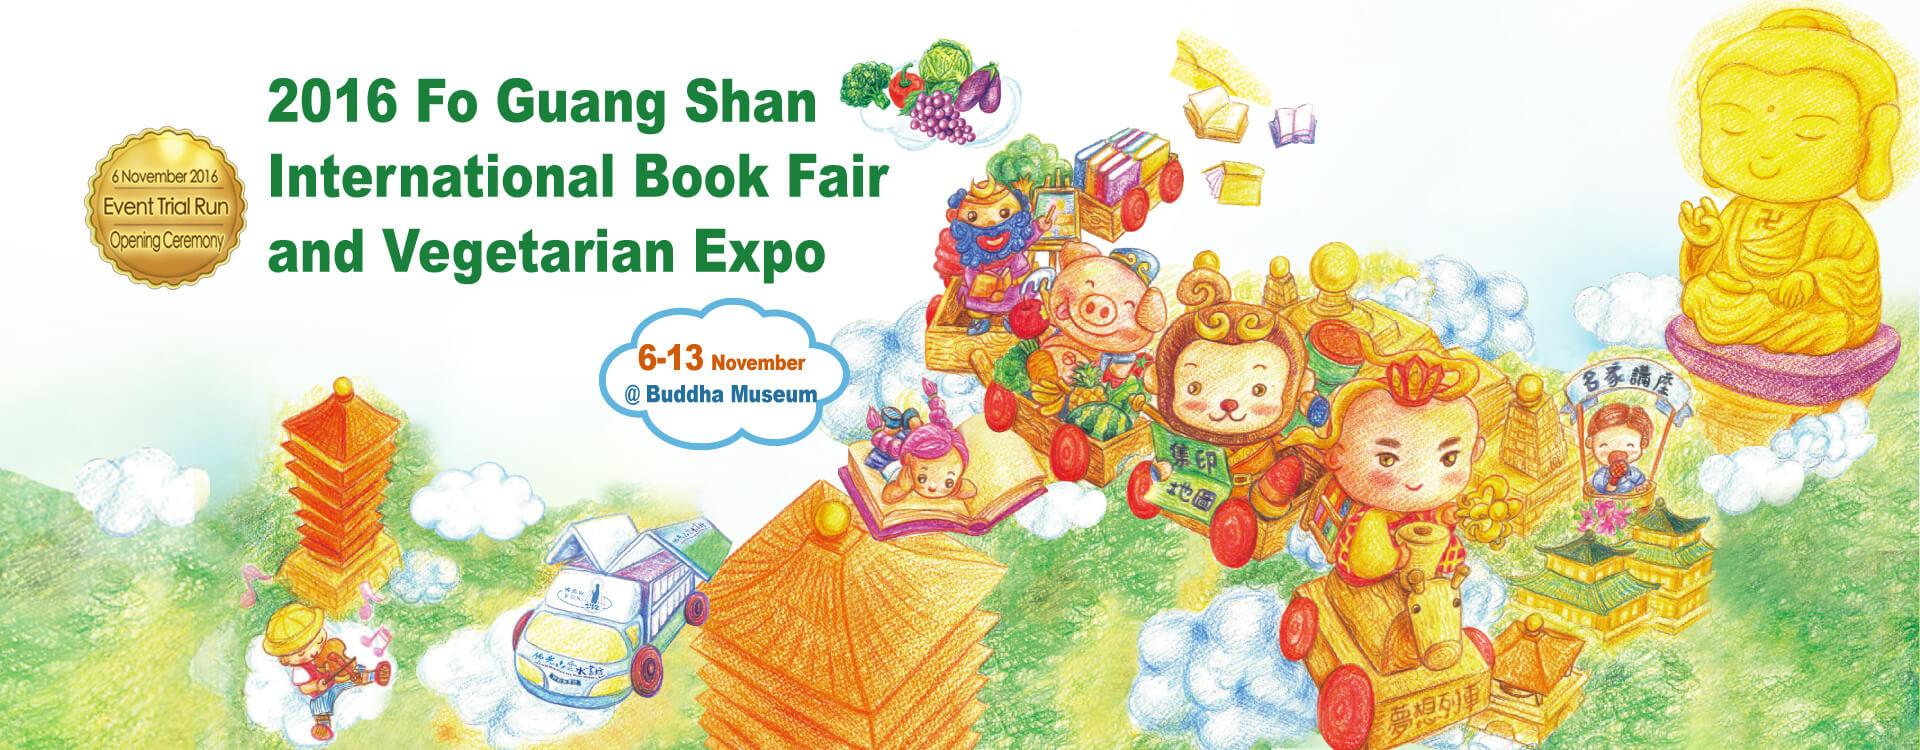 2016 Fo Guang Shan Buddha Museum International Book Fair and Vegetarian Expo 